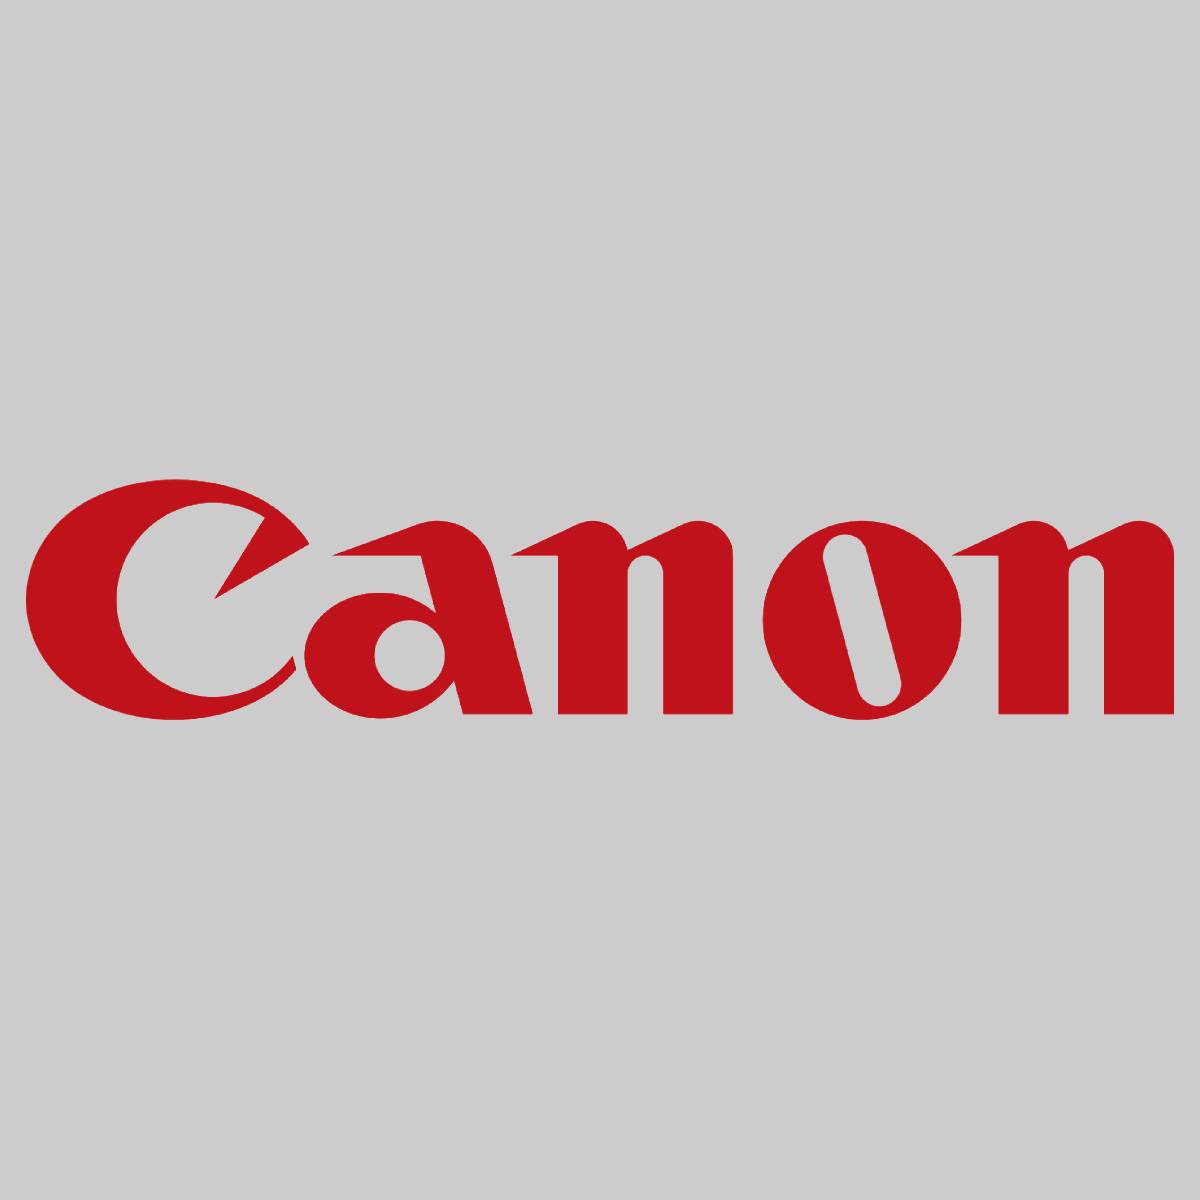 "Original Canon Developer Assembly Cyan FM4-8353-010 IR C5030 C5035 C5045 C5051